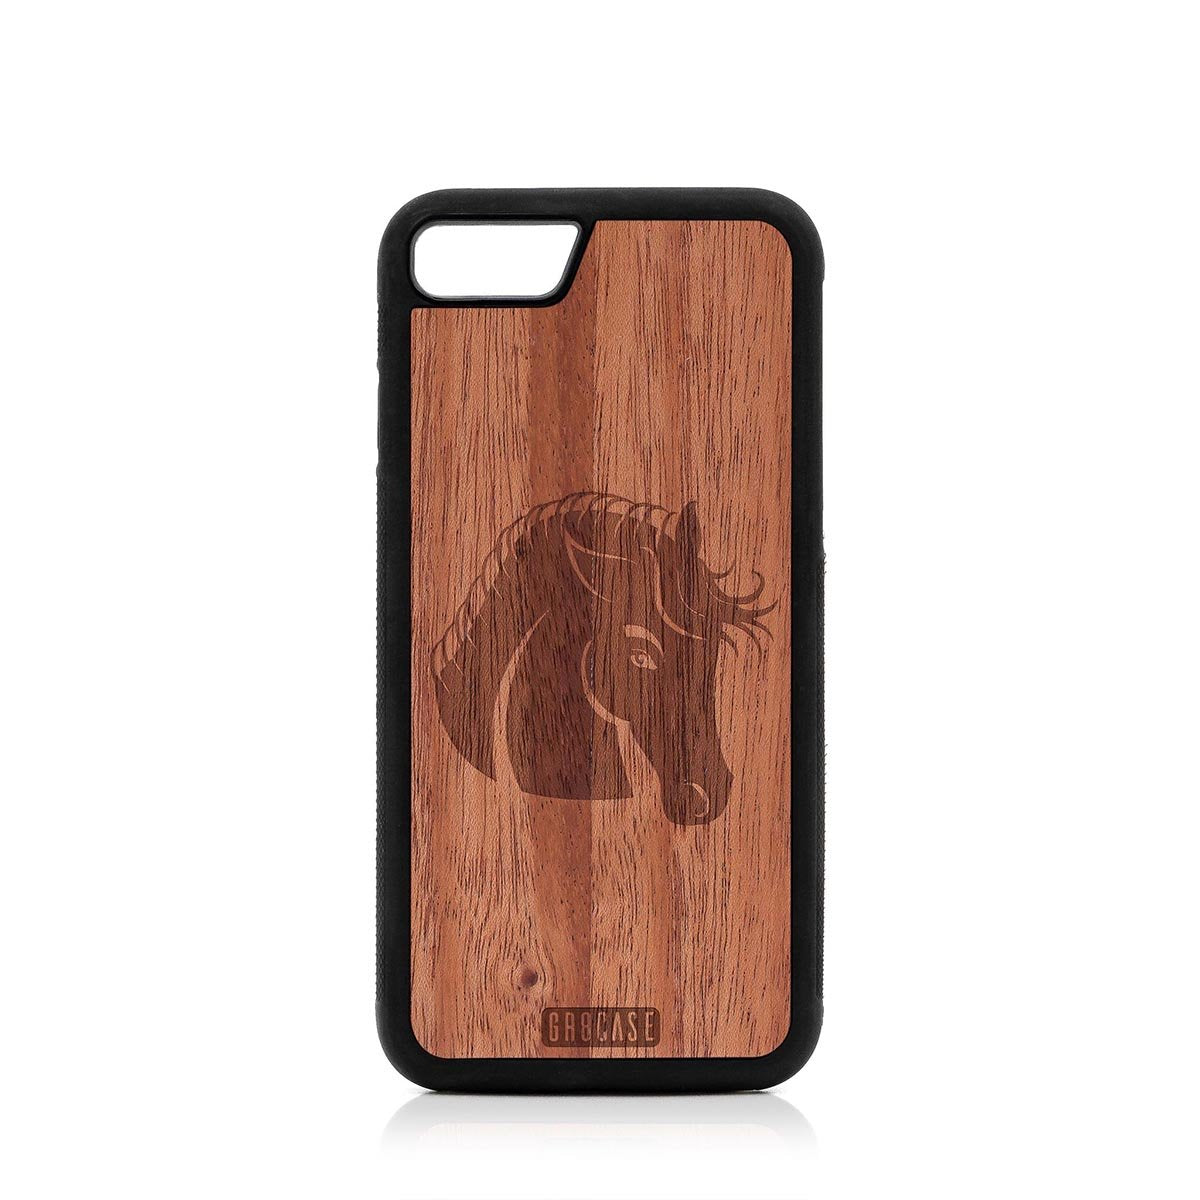 Horse Design Wood Case For iPhone SE 2020 by GR8CASE